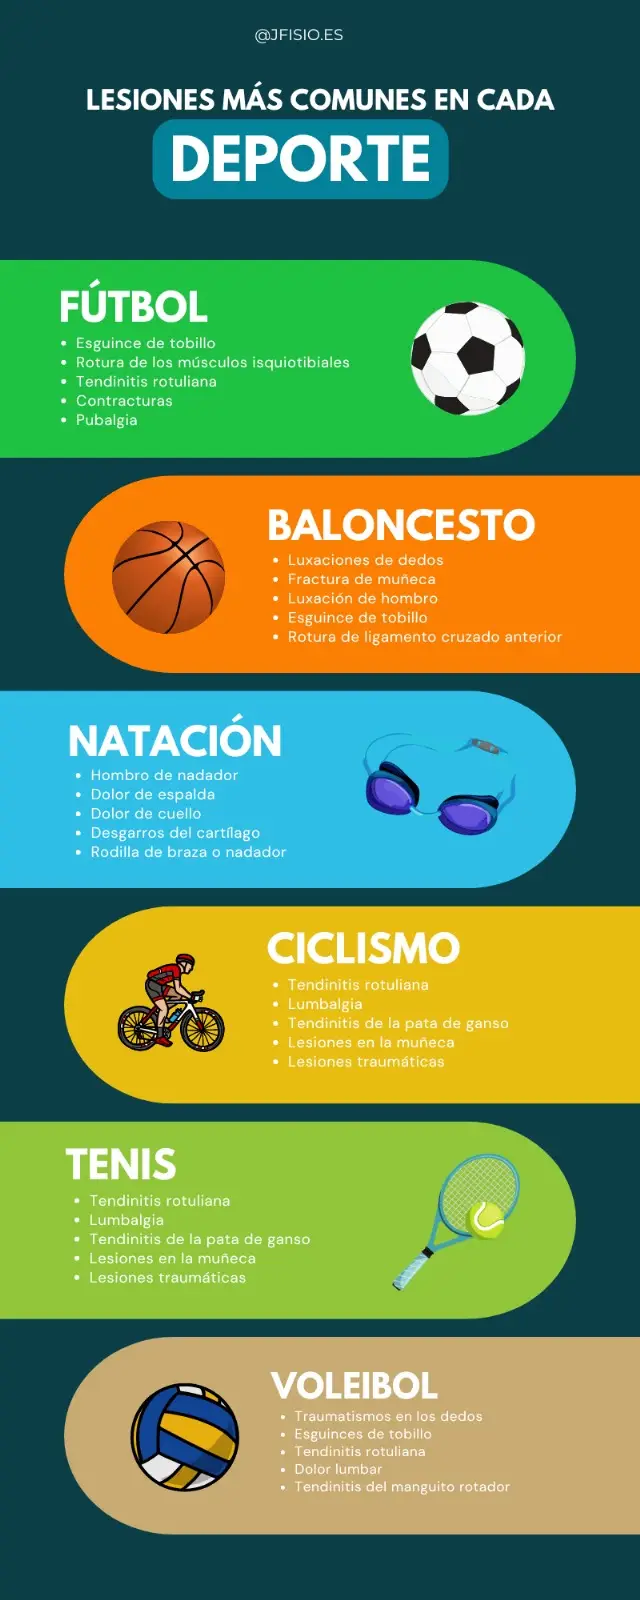 infografia-lesiones-mas-frecuentes-deportivas-jfisio.es